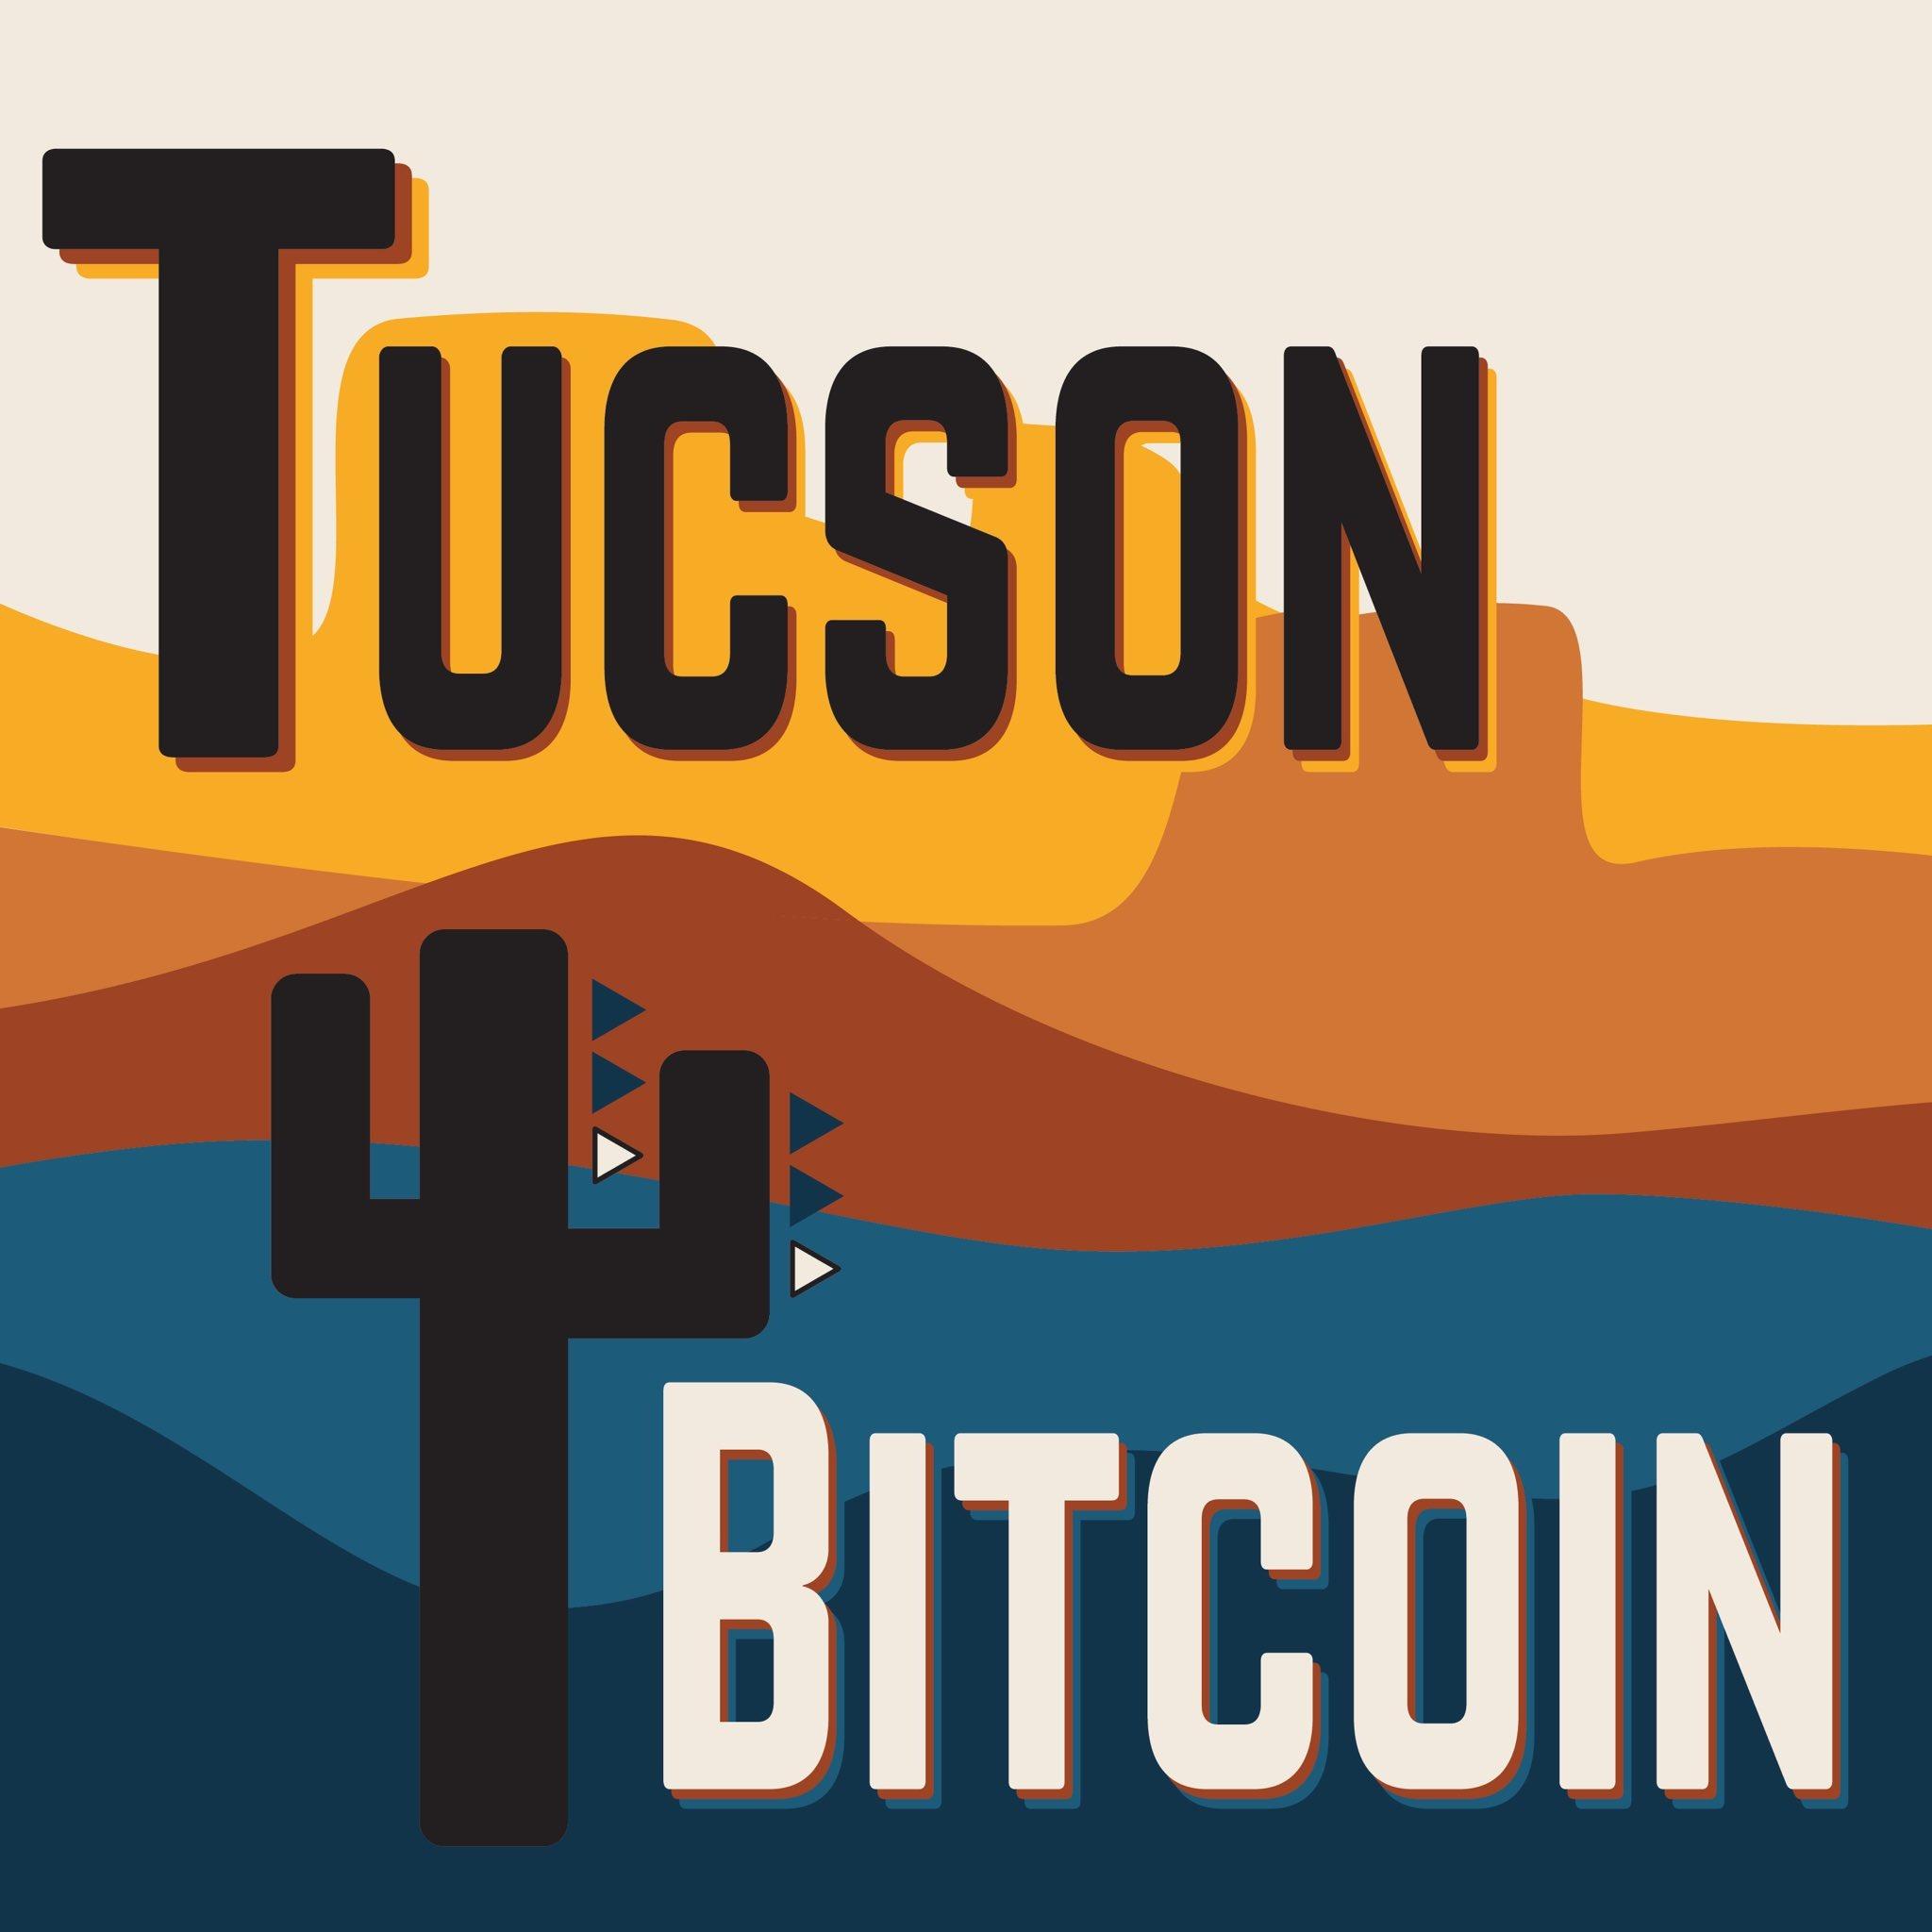 Tucson Bitcoin Podcast